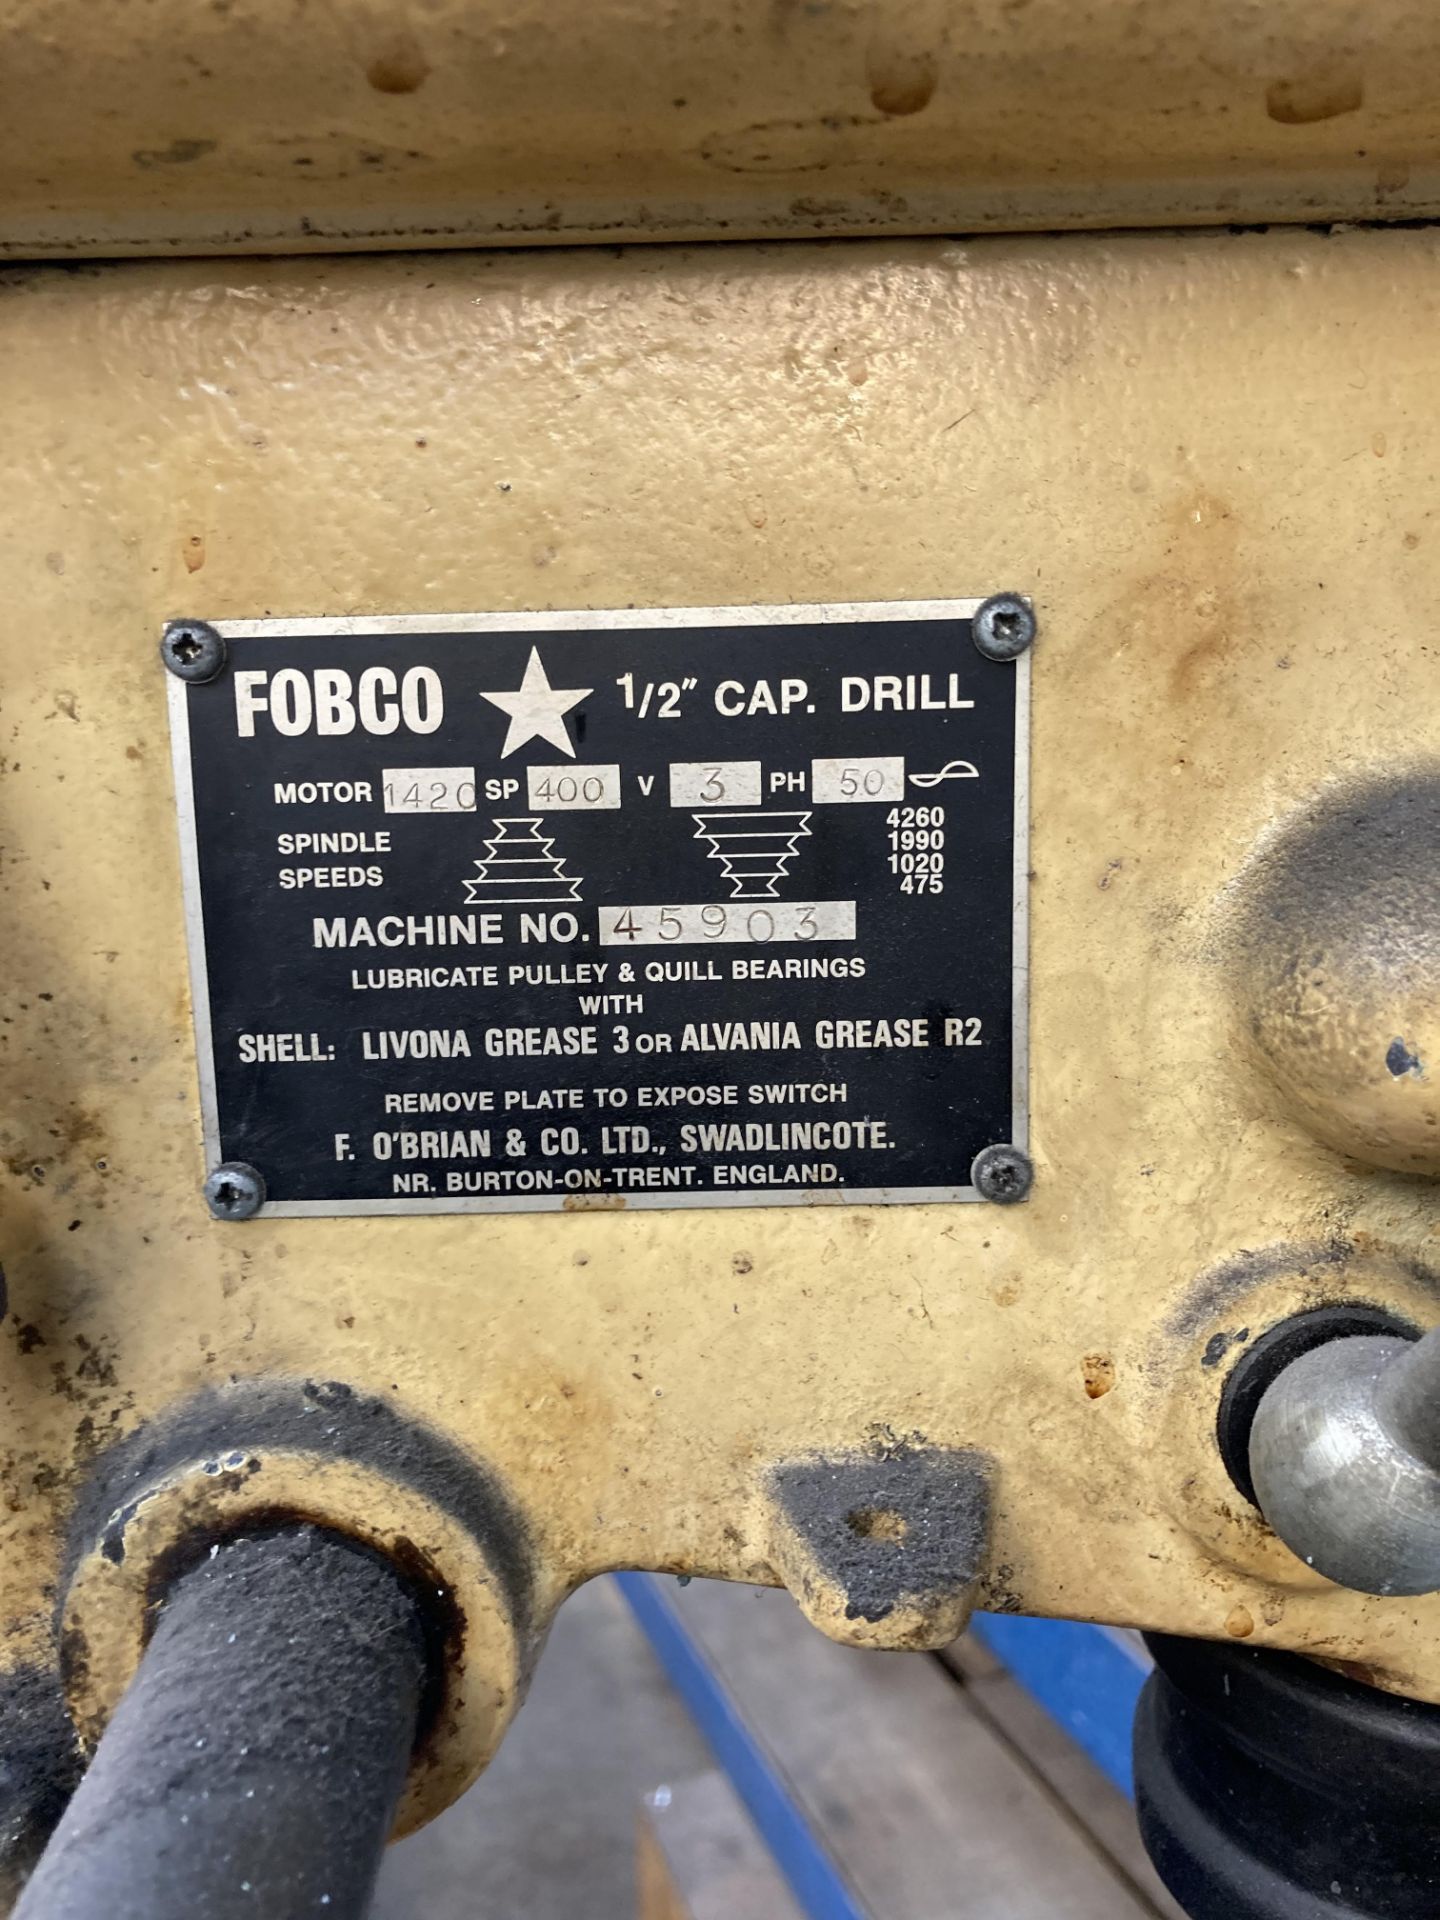 Fobco 0.5" pedestal mounted pillar drill, Serial No. 45903, speeds 475-4260 - Image 2 of 3